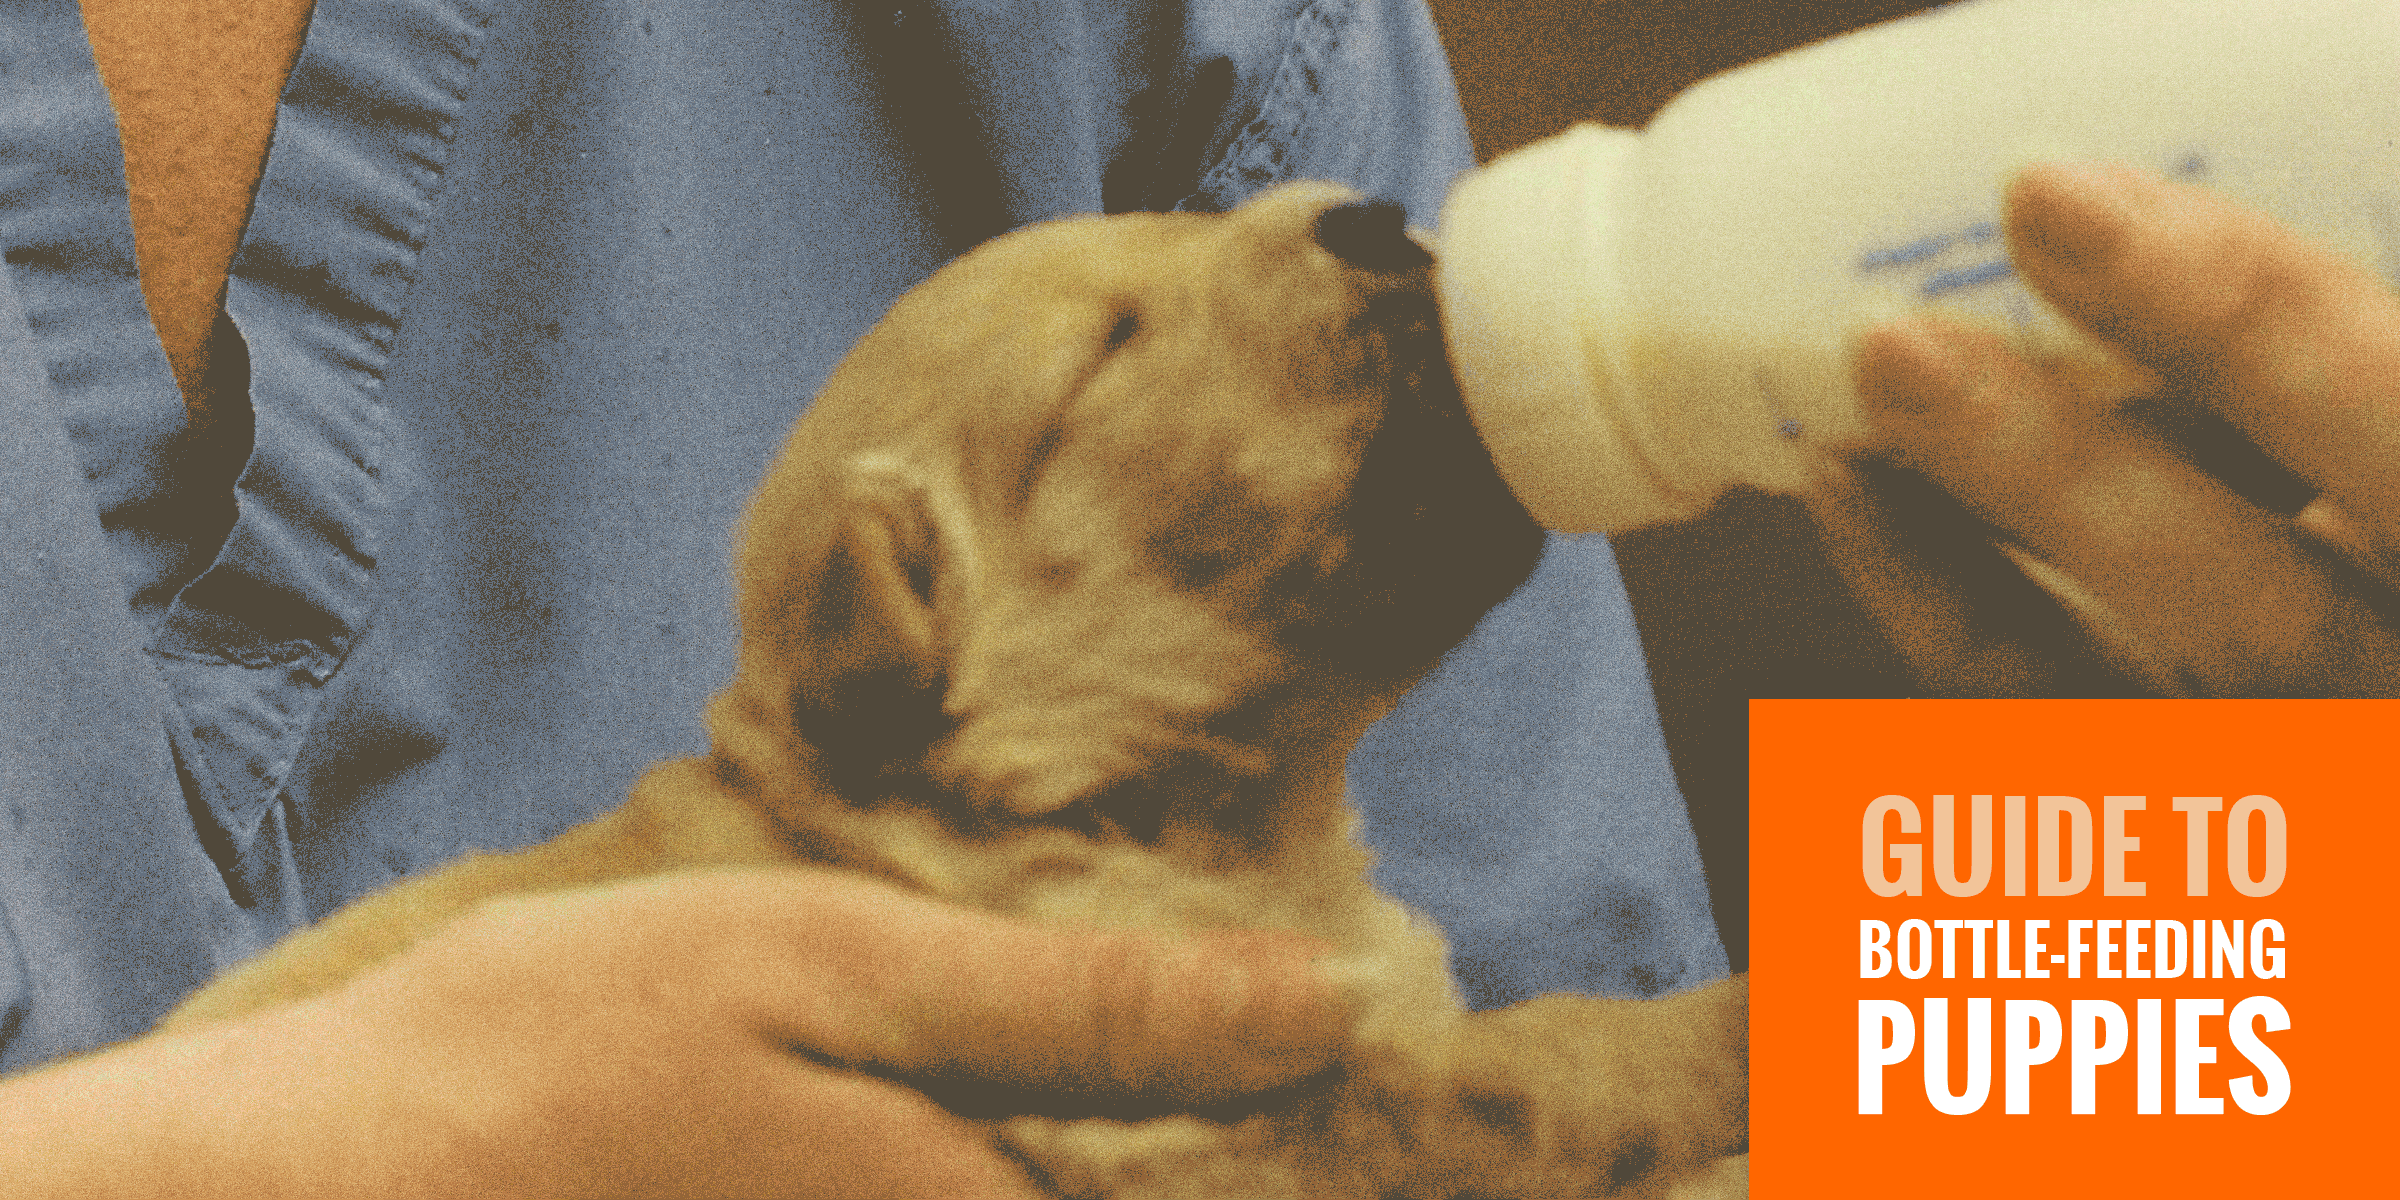 BottleFeeding Puppies — FREE Guide to HandFeeding Puppies